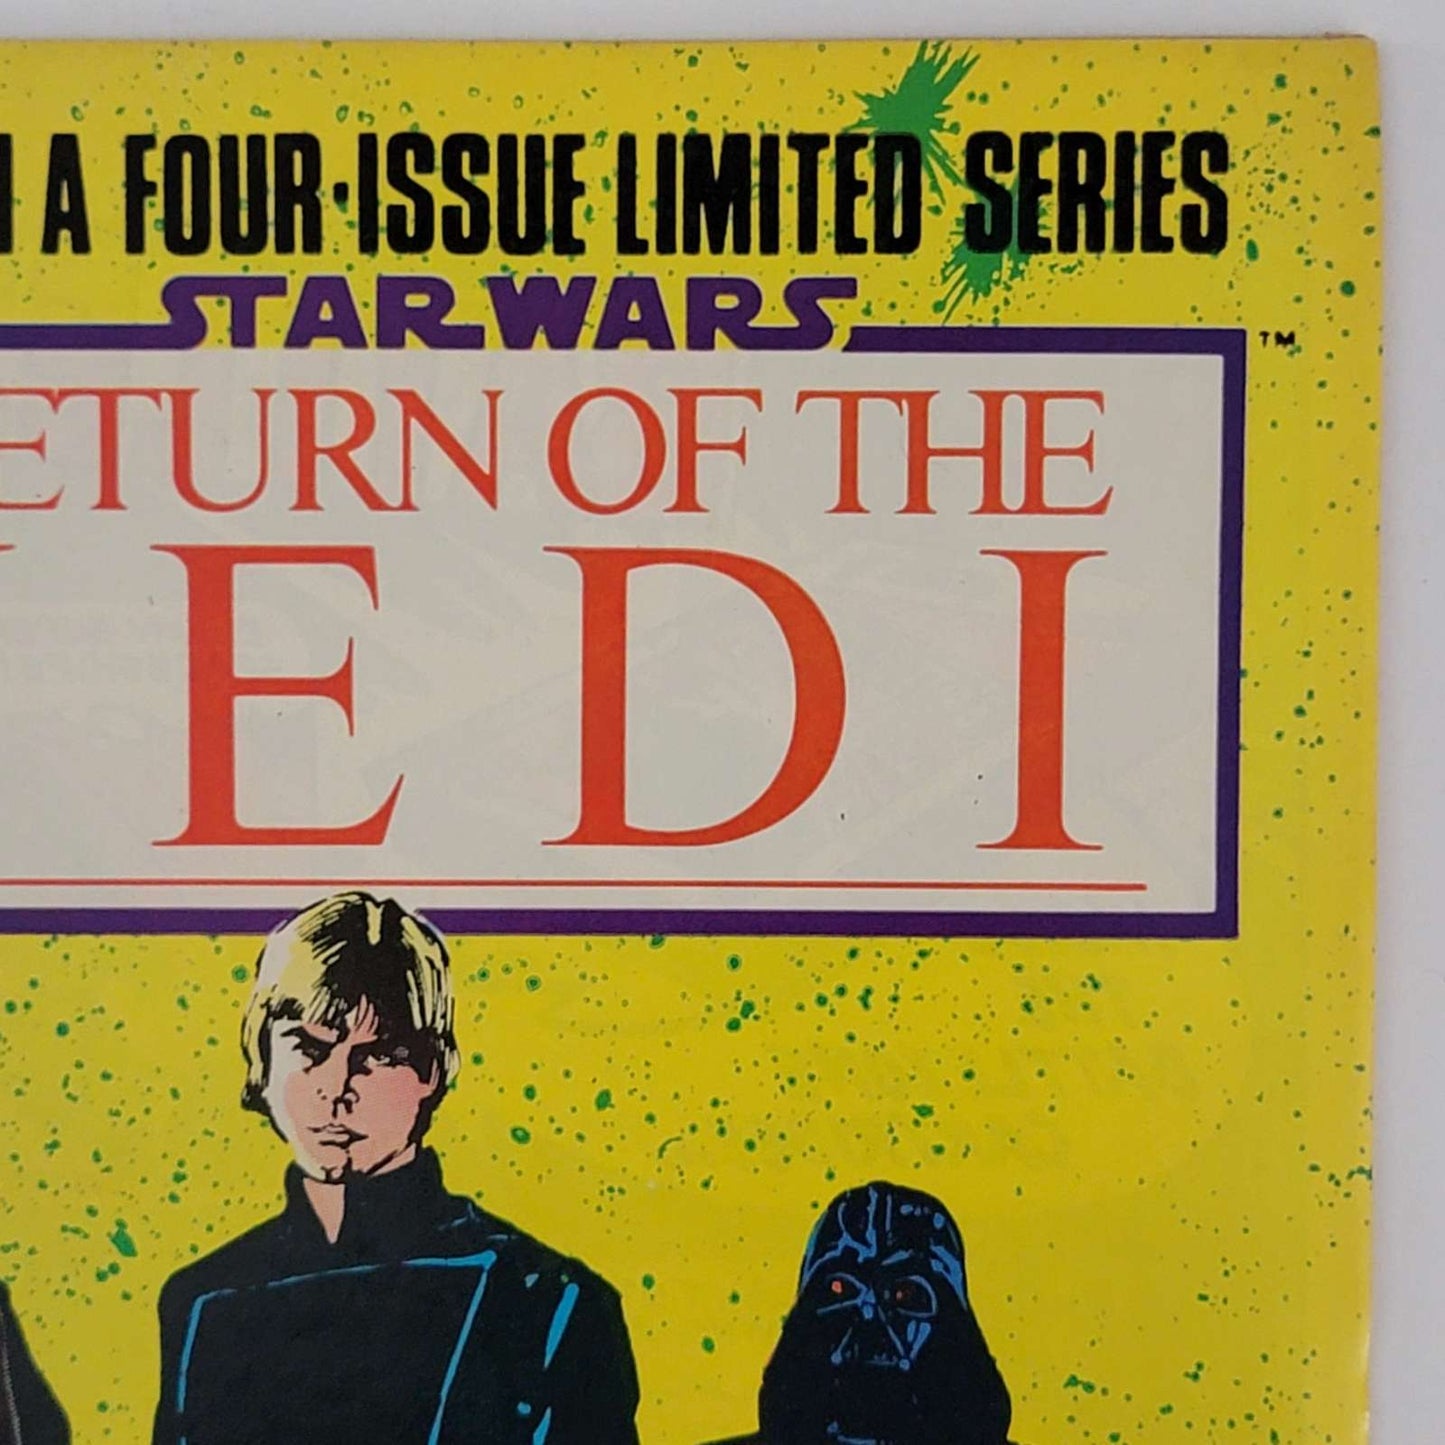 Return of the Jedi #4